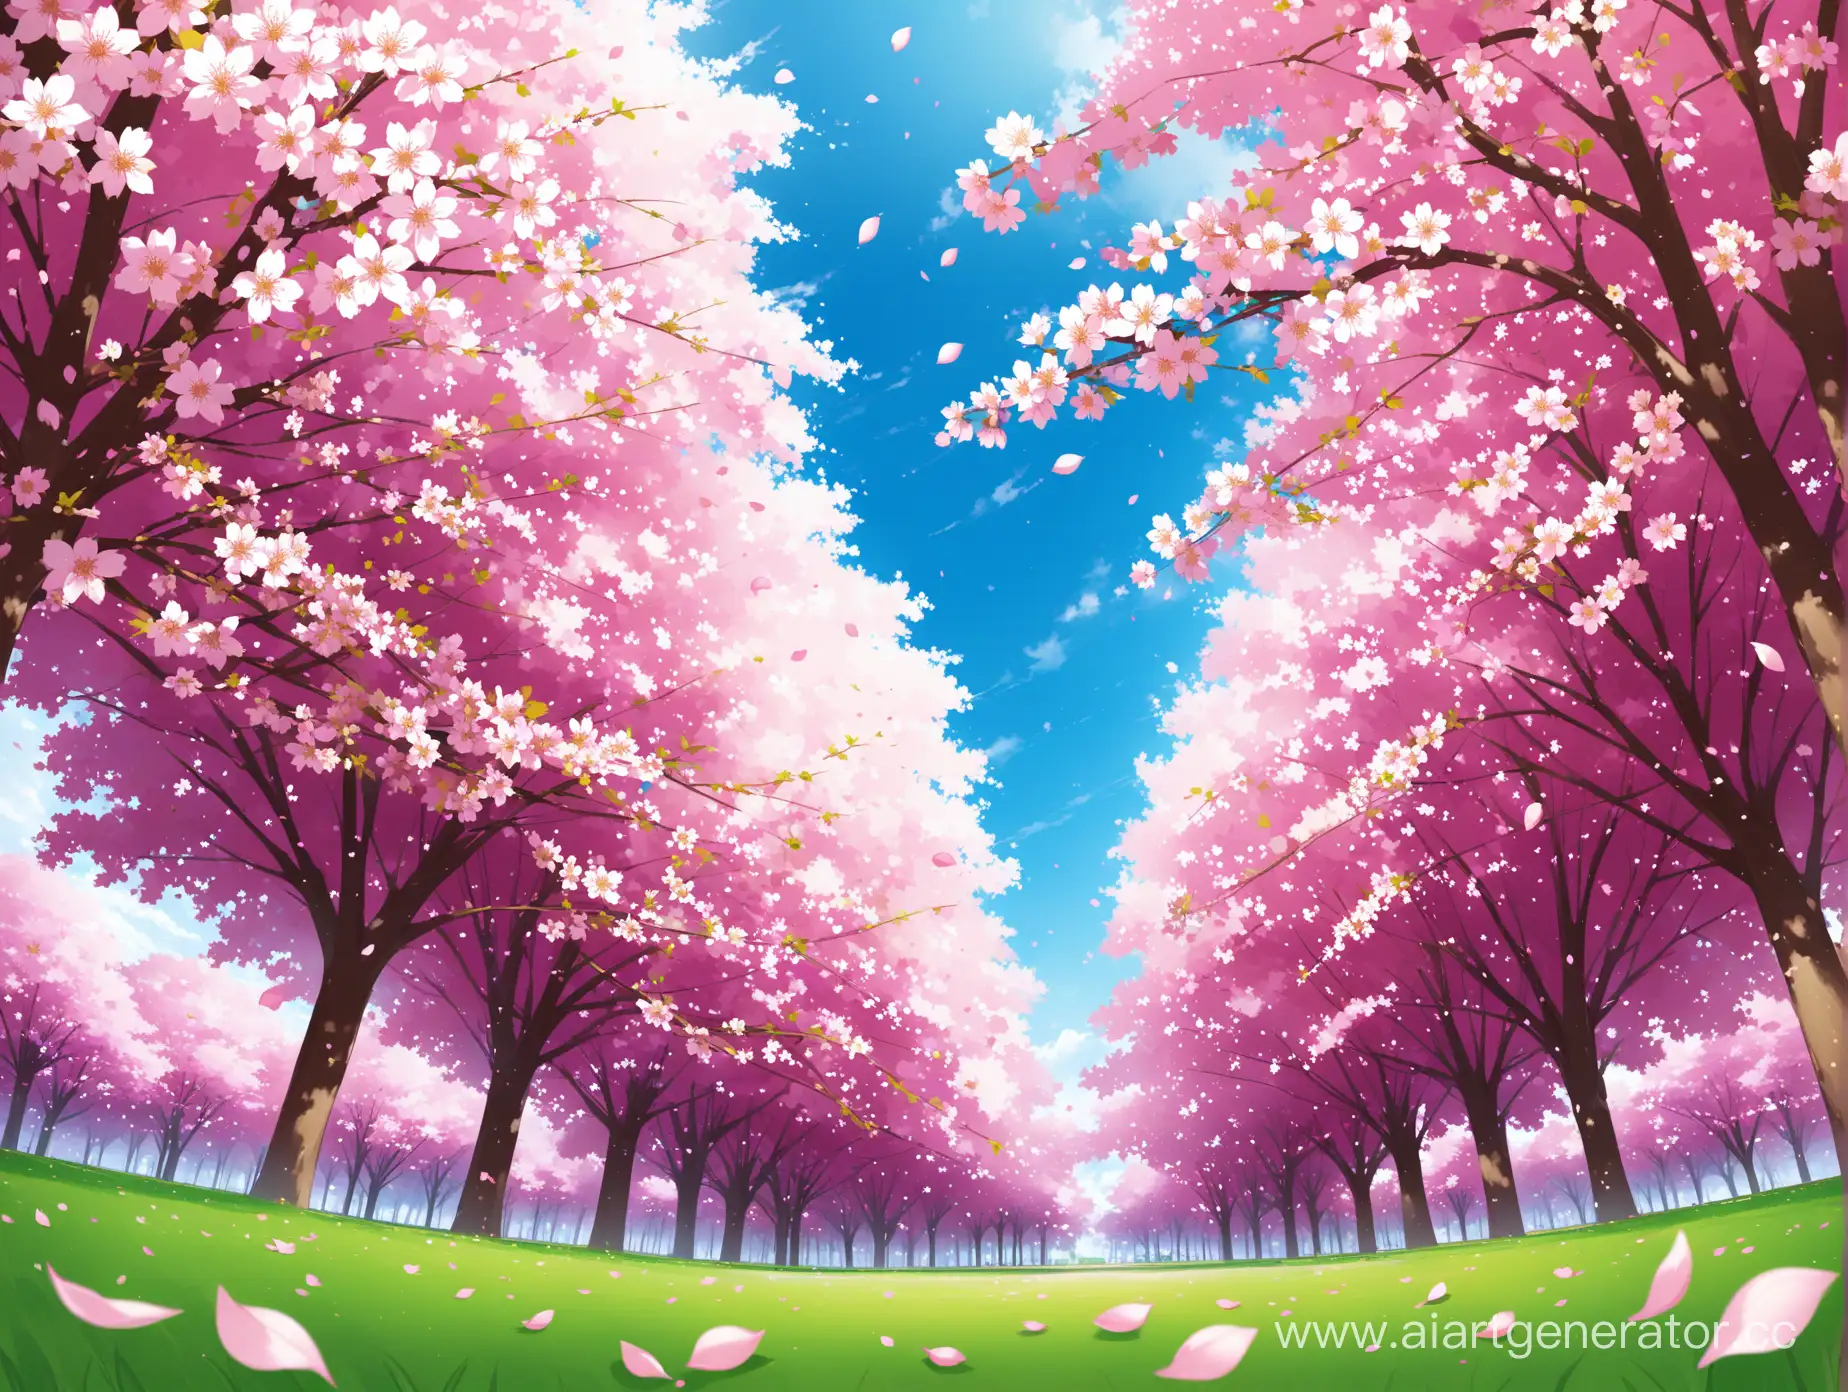 Sakura-Petals-Falling-in-Park-Tranquil-View-from-Below